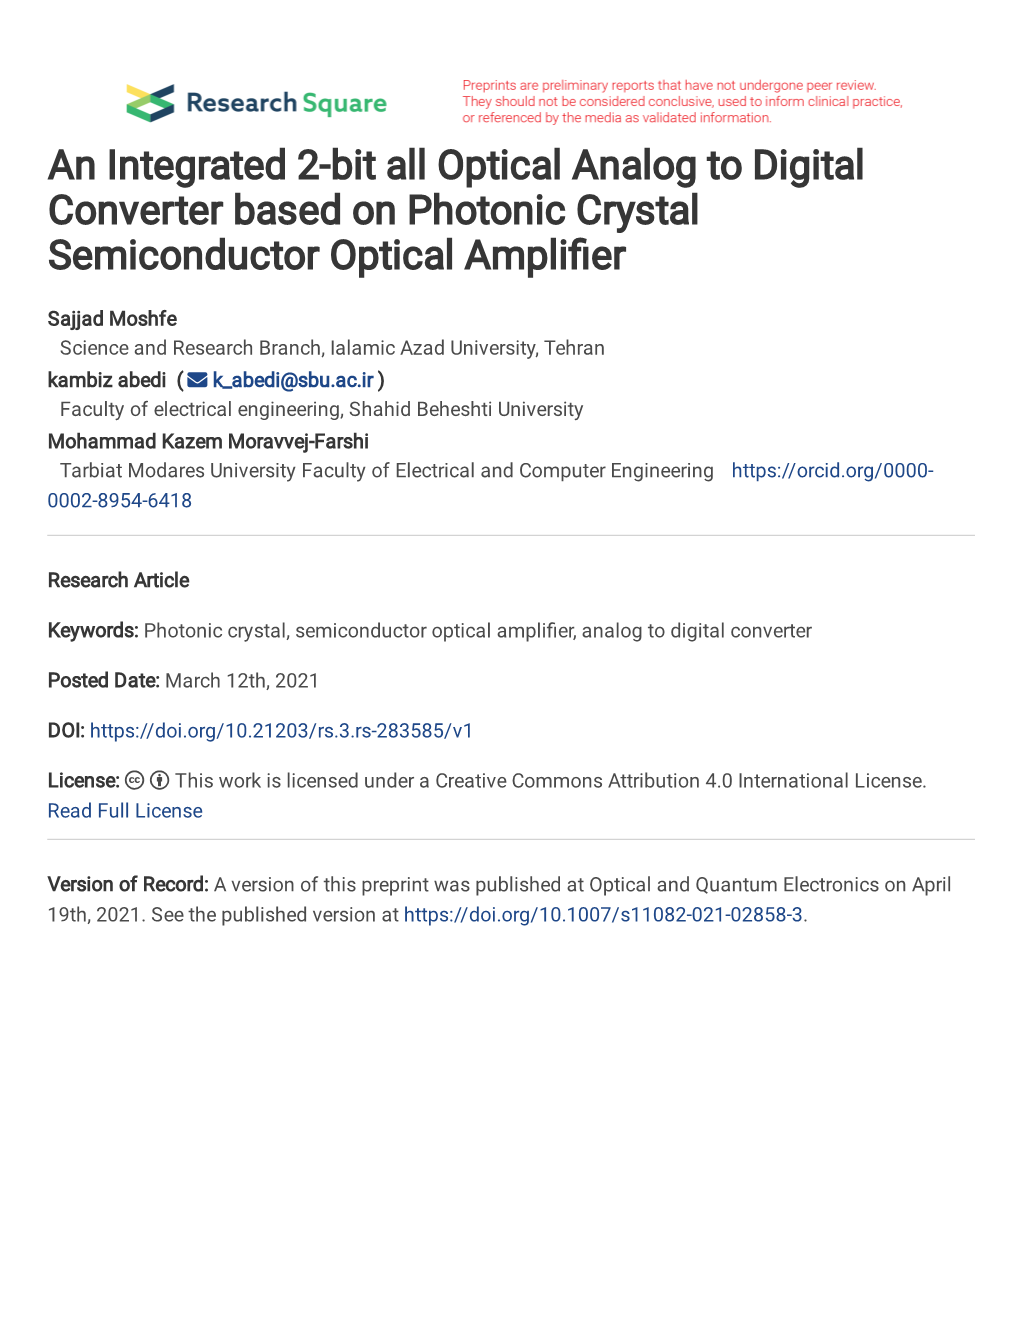 An Integrated 2-Bit All Optical Analog to Digital Converter Based on Photonic Crystal Semiconductor Optical Ampli�Er